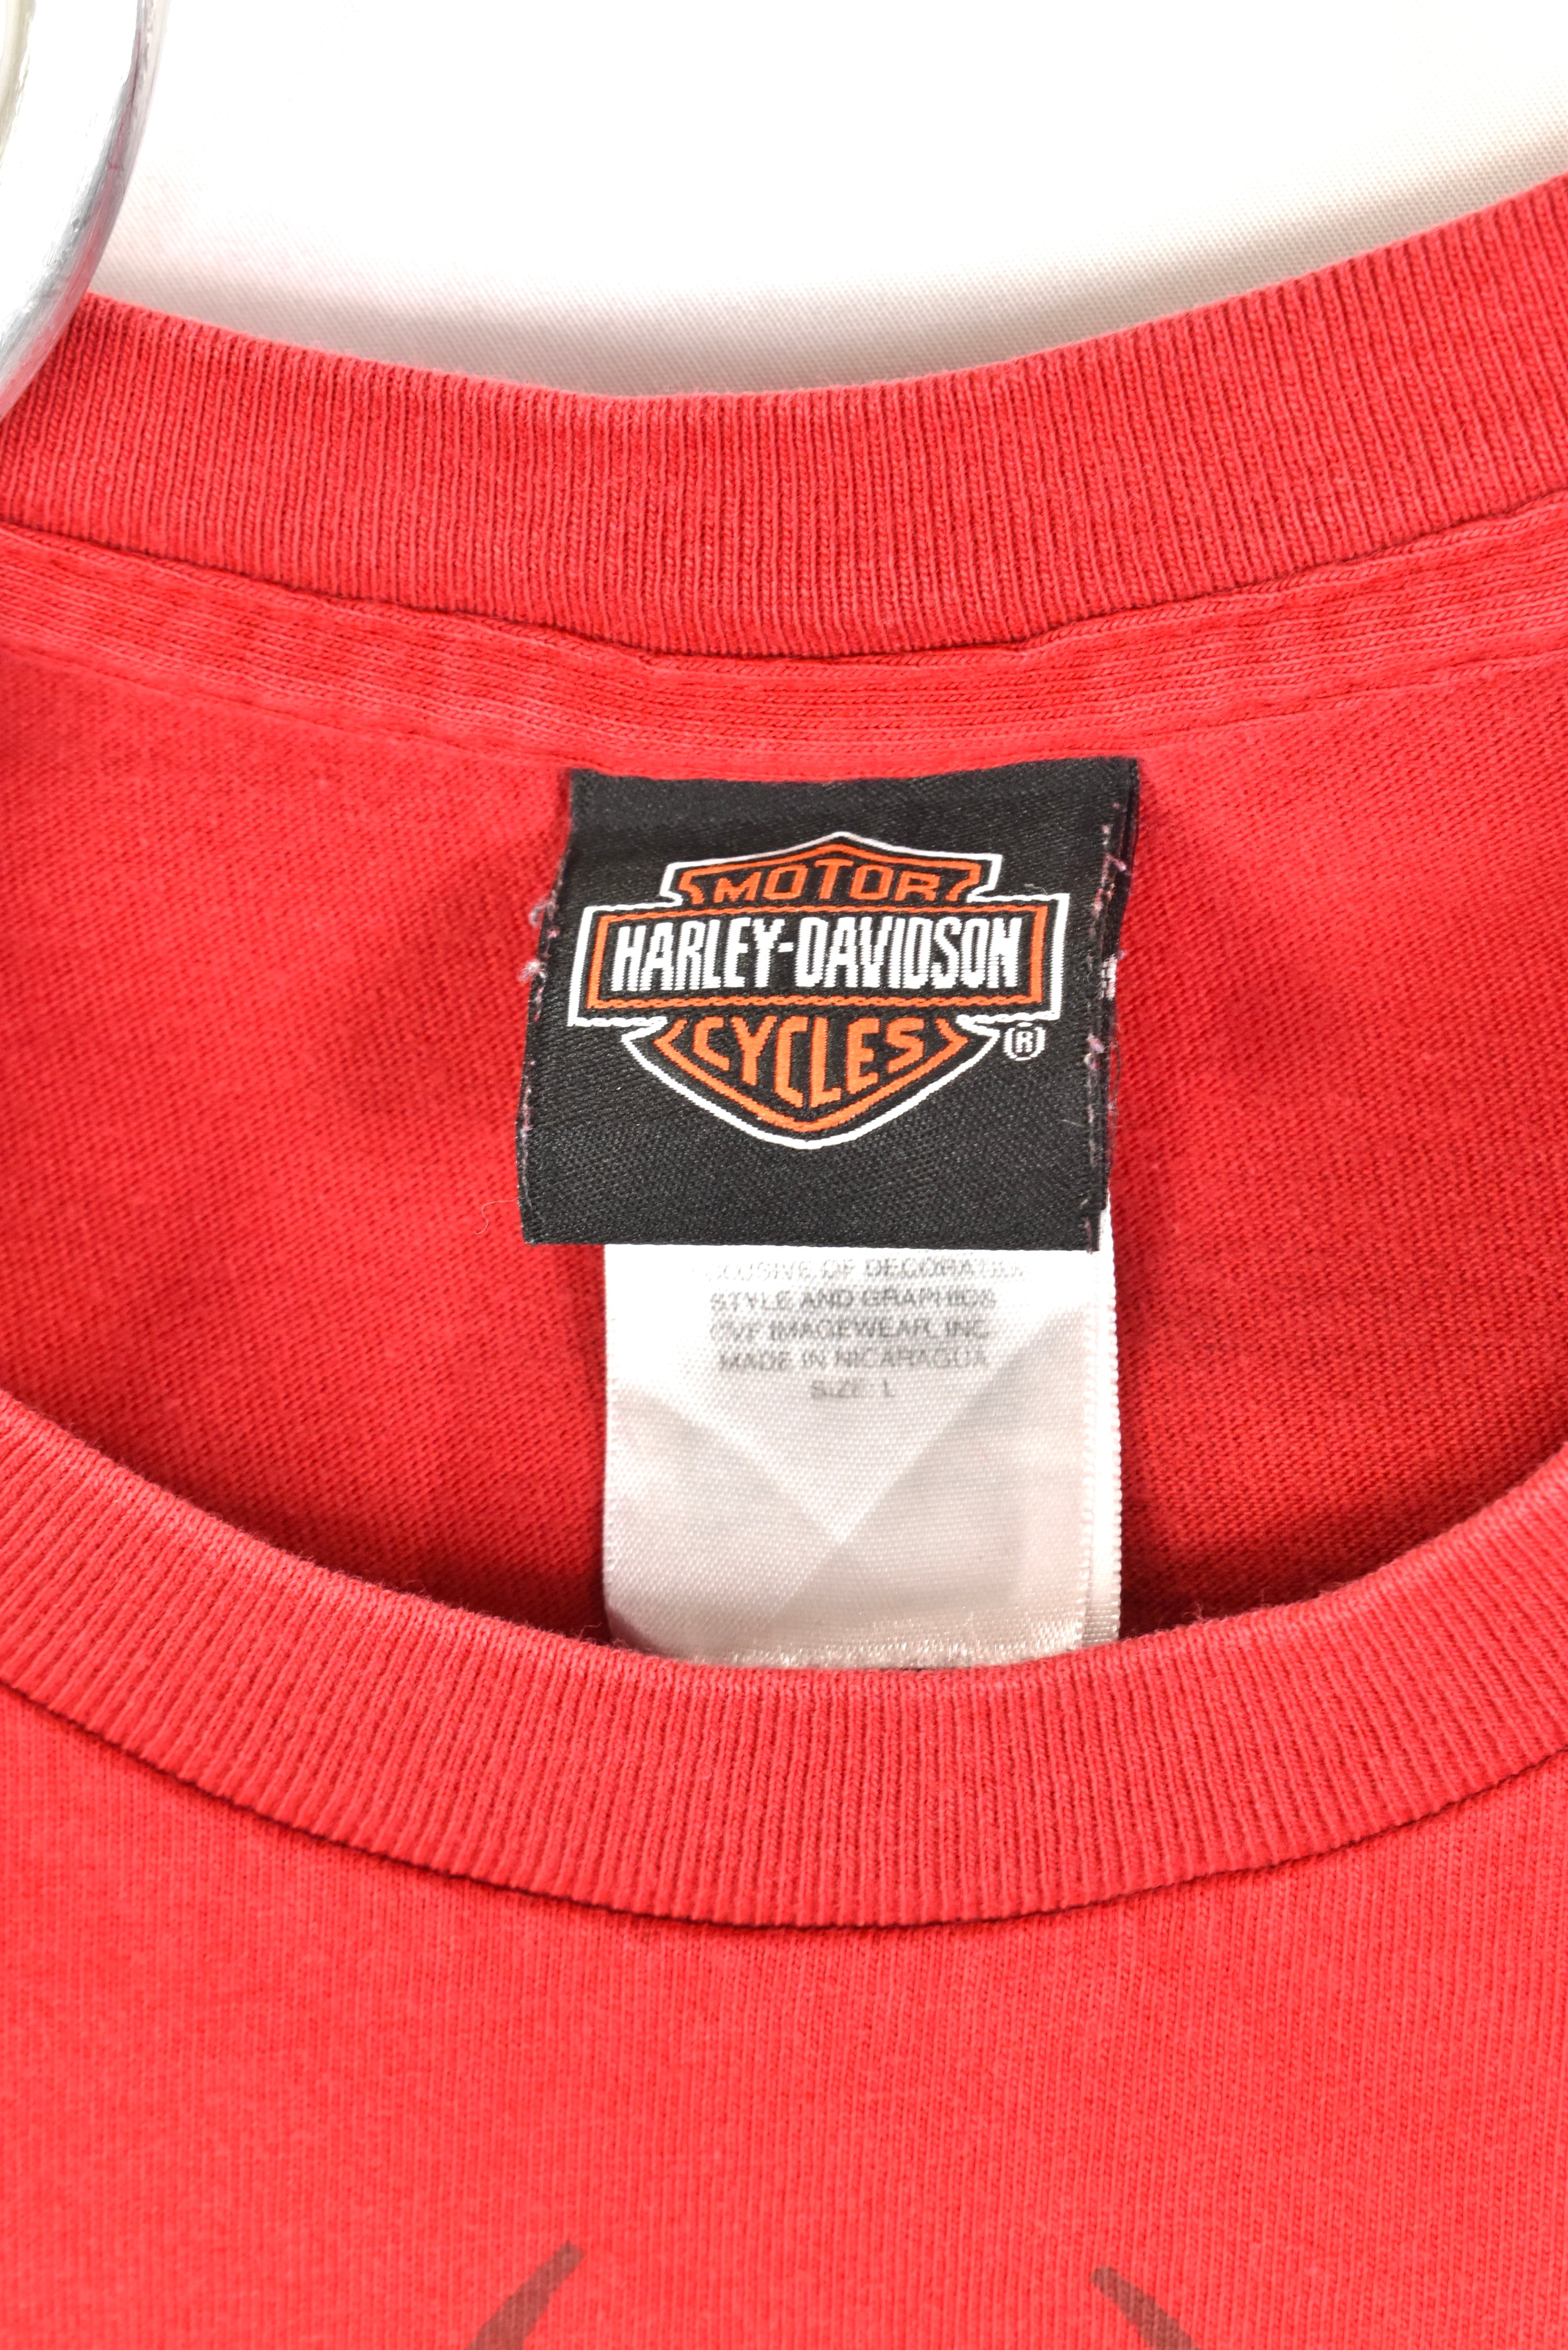 Modern Harley Davidson shirt, 2010 short sleeve graphic tee - medium, red HARLEY DAVIDSON